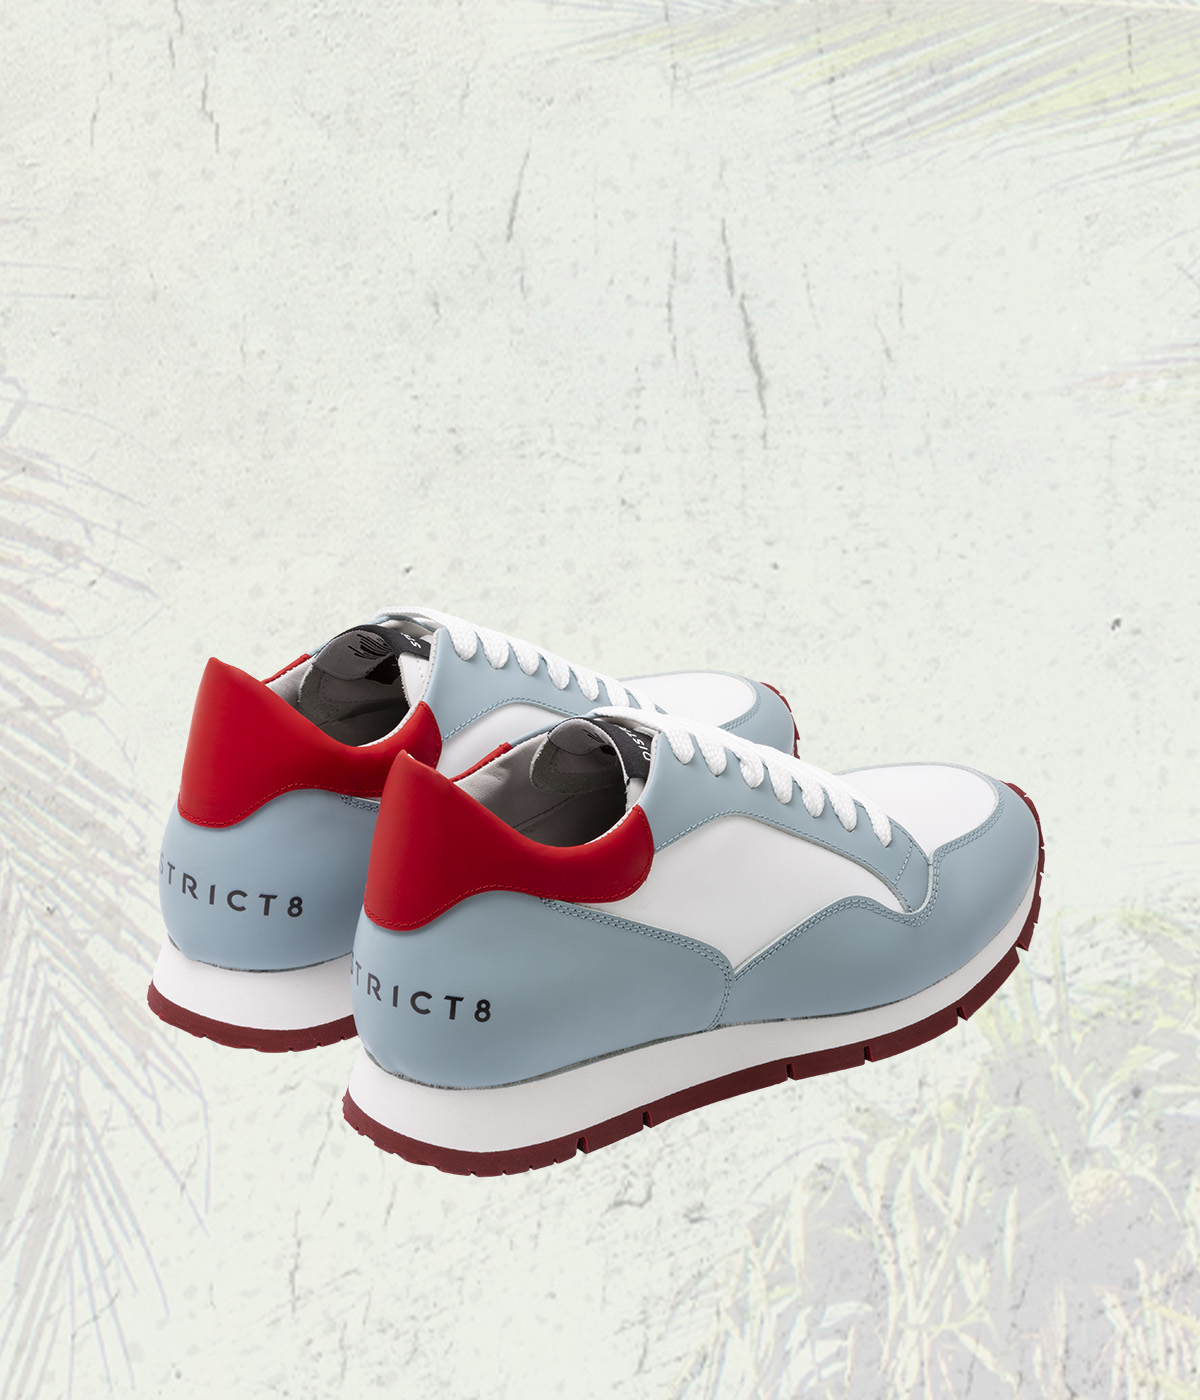 DISTRICT8 - Sneakers Diamond Lane (813) in pelle gommata bianca/celeste, spoiler rosso e logo serigrafato